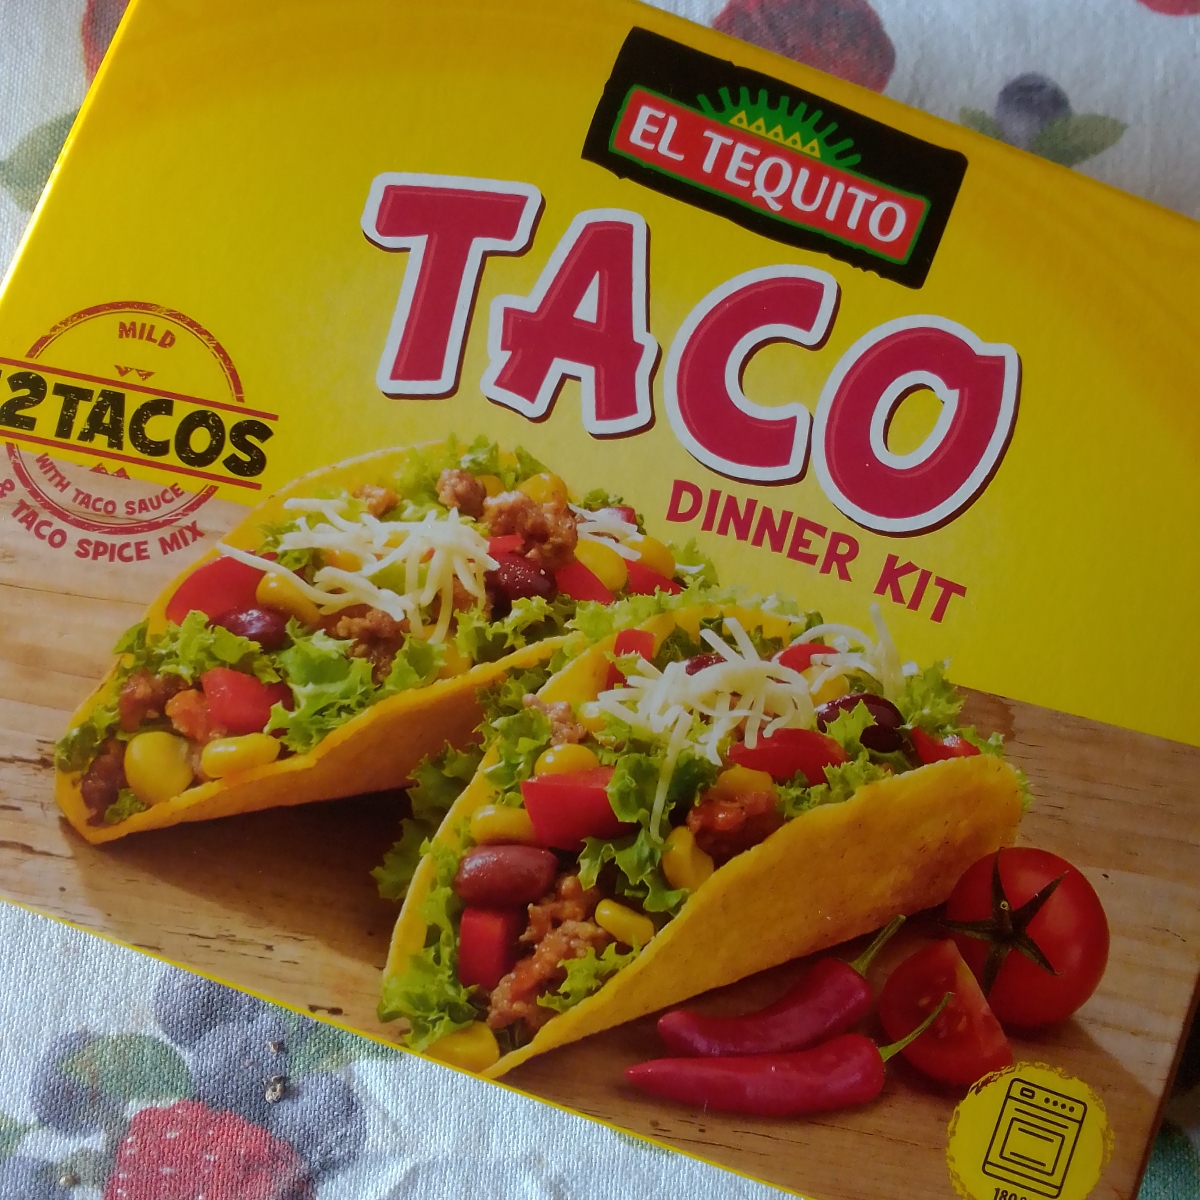 El Tequito Taco Dinner Kit Review | abillion